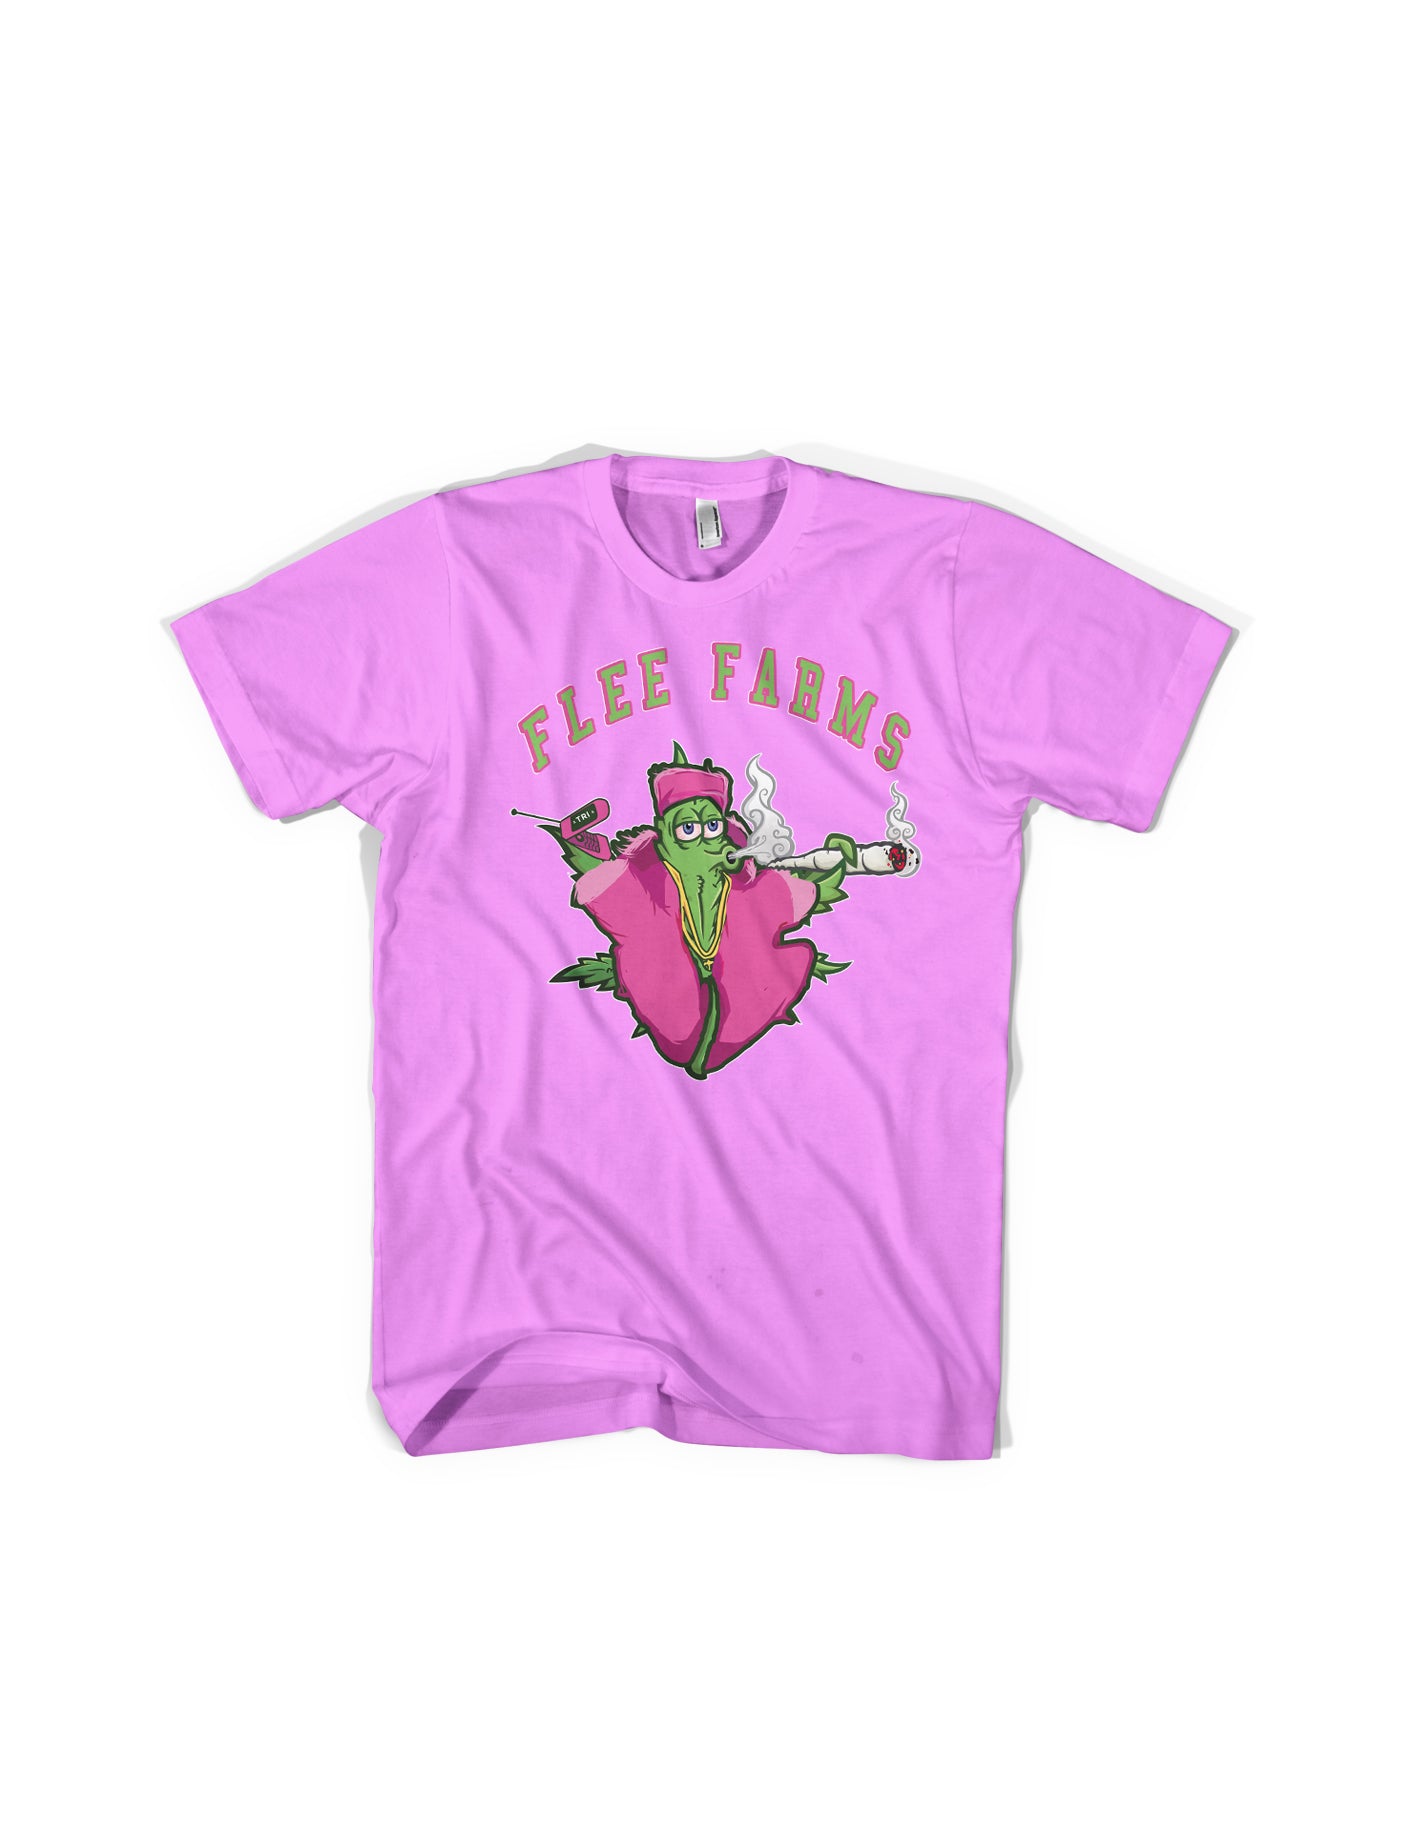 Flee Farms T-Shirt Pink